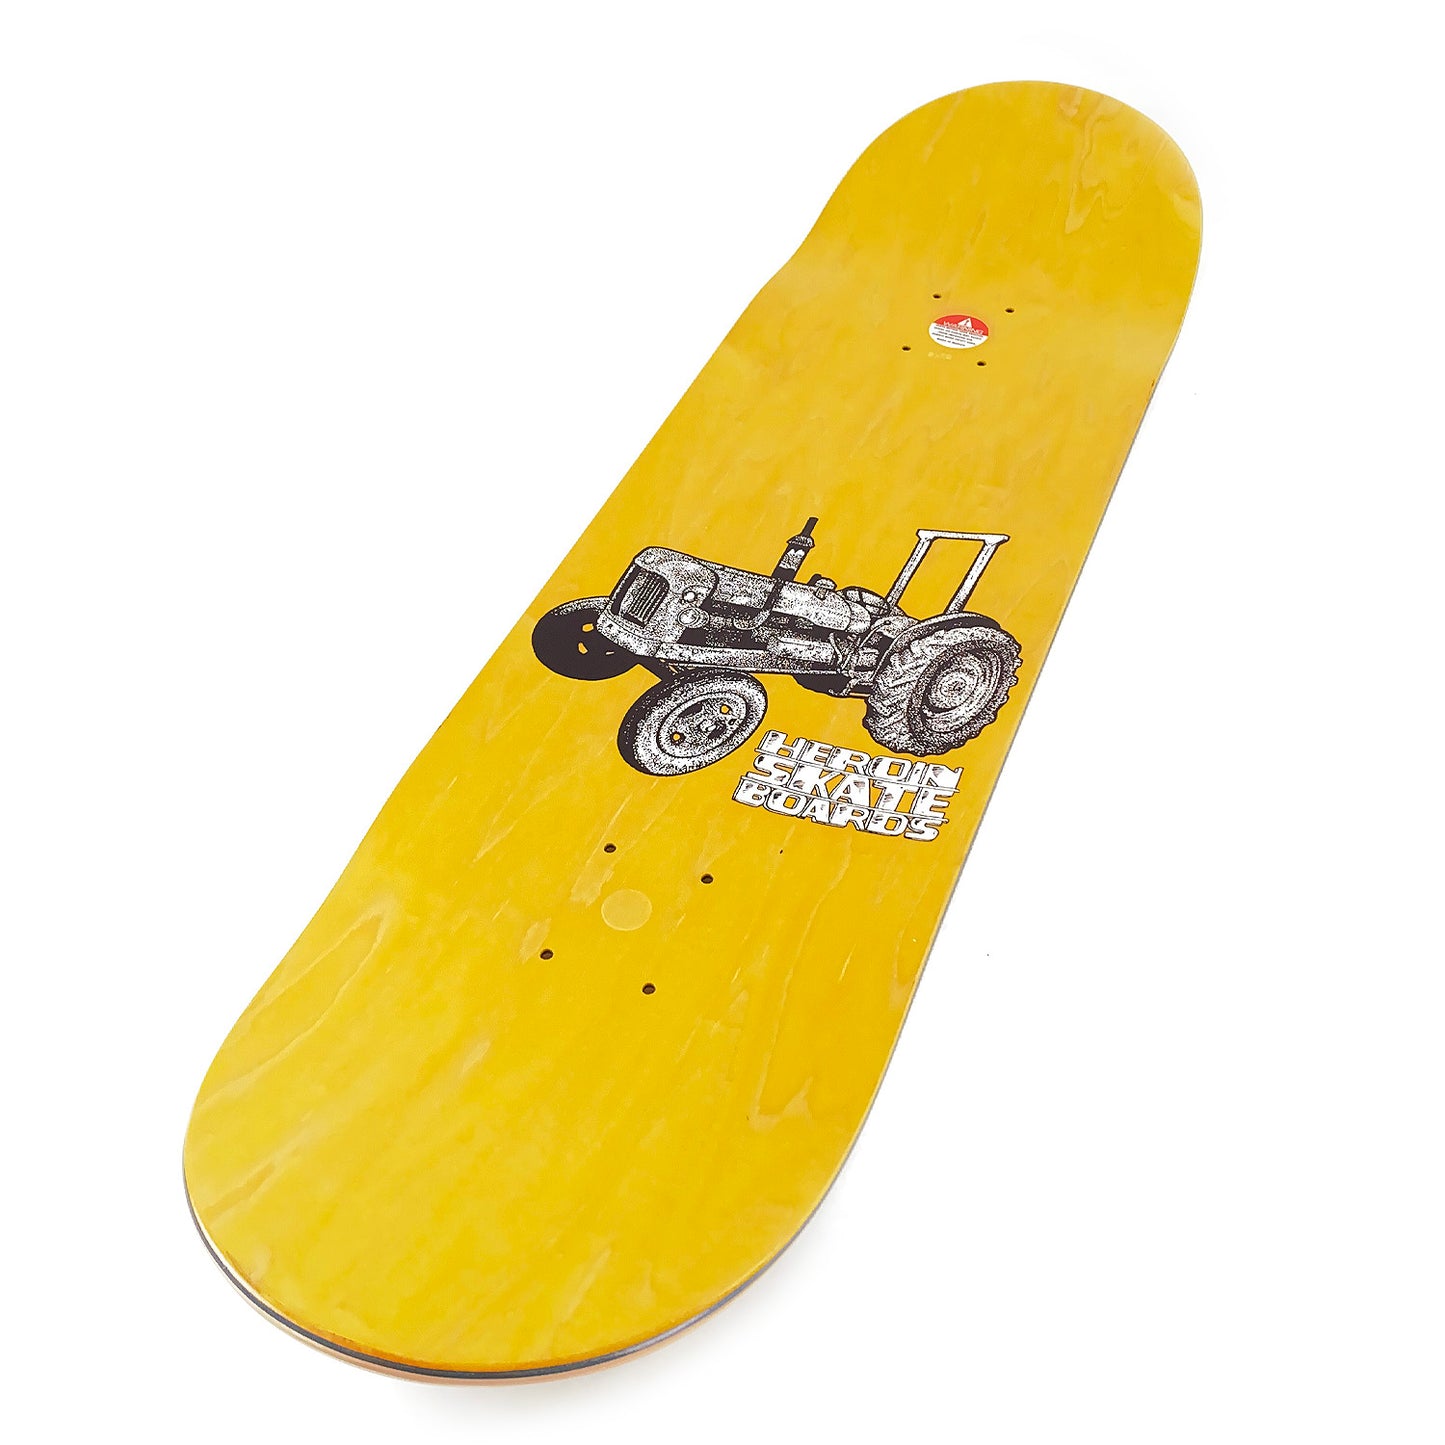 Heroin Skateboards - 8.75" - Tom Day ‘Farm’ Deck - Green Stain - Prime Delux Store